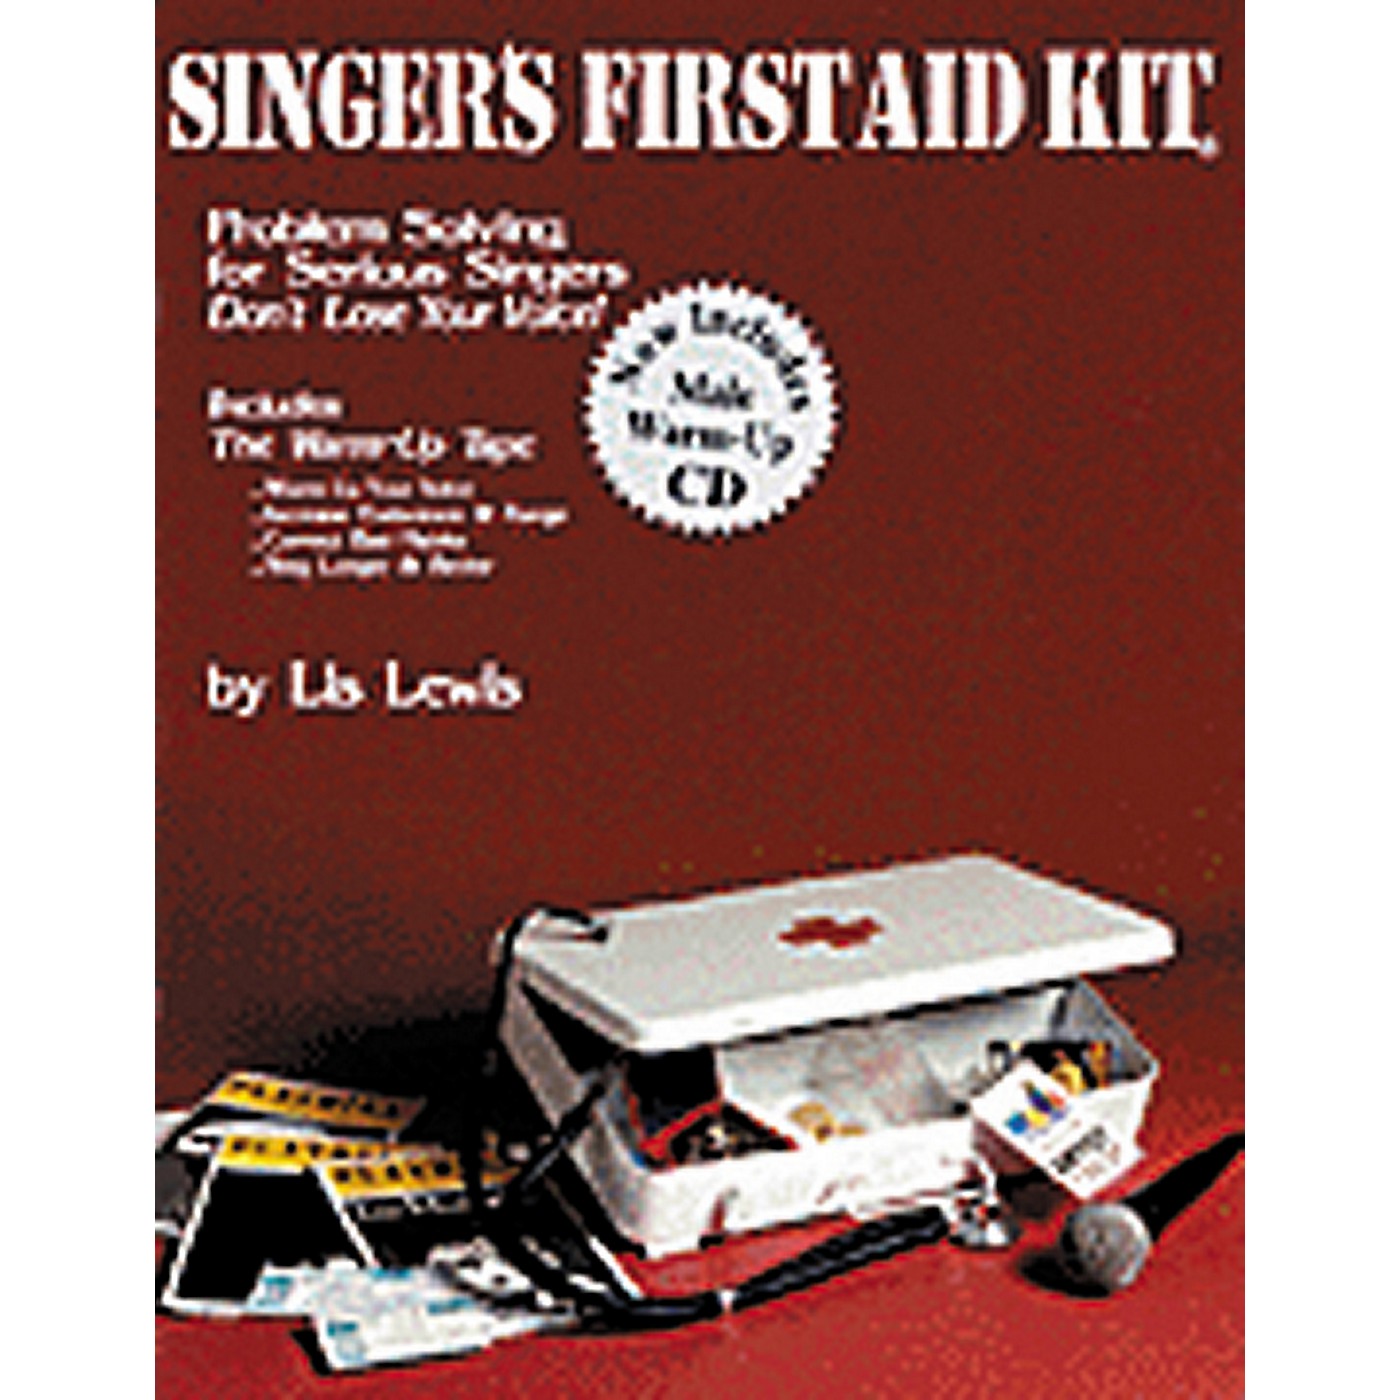 Hal Leonard Singer's First Aid Kit - Male Voice Book/CD thumbnail